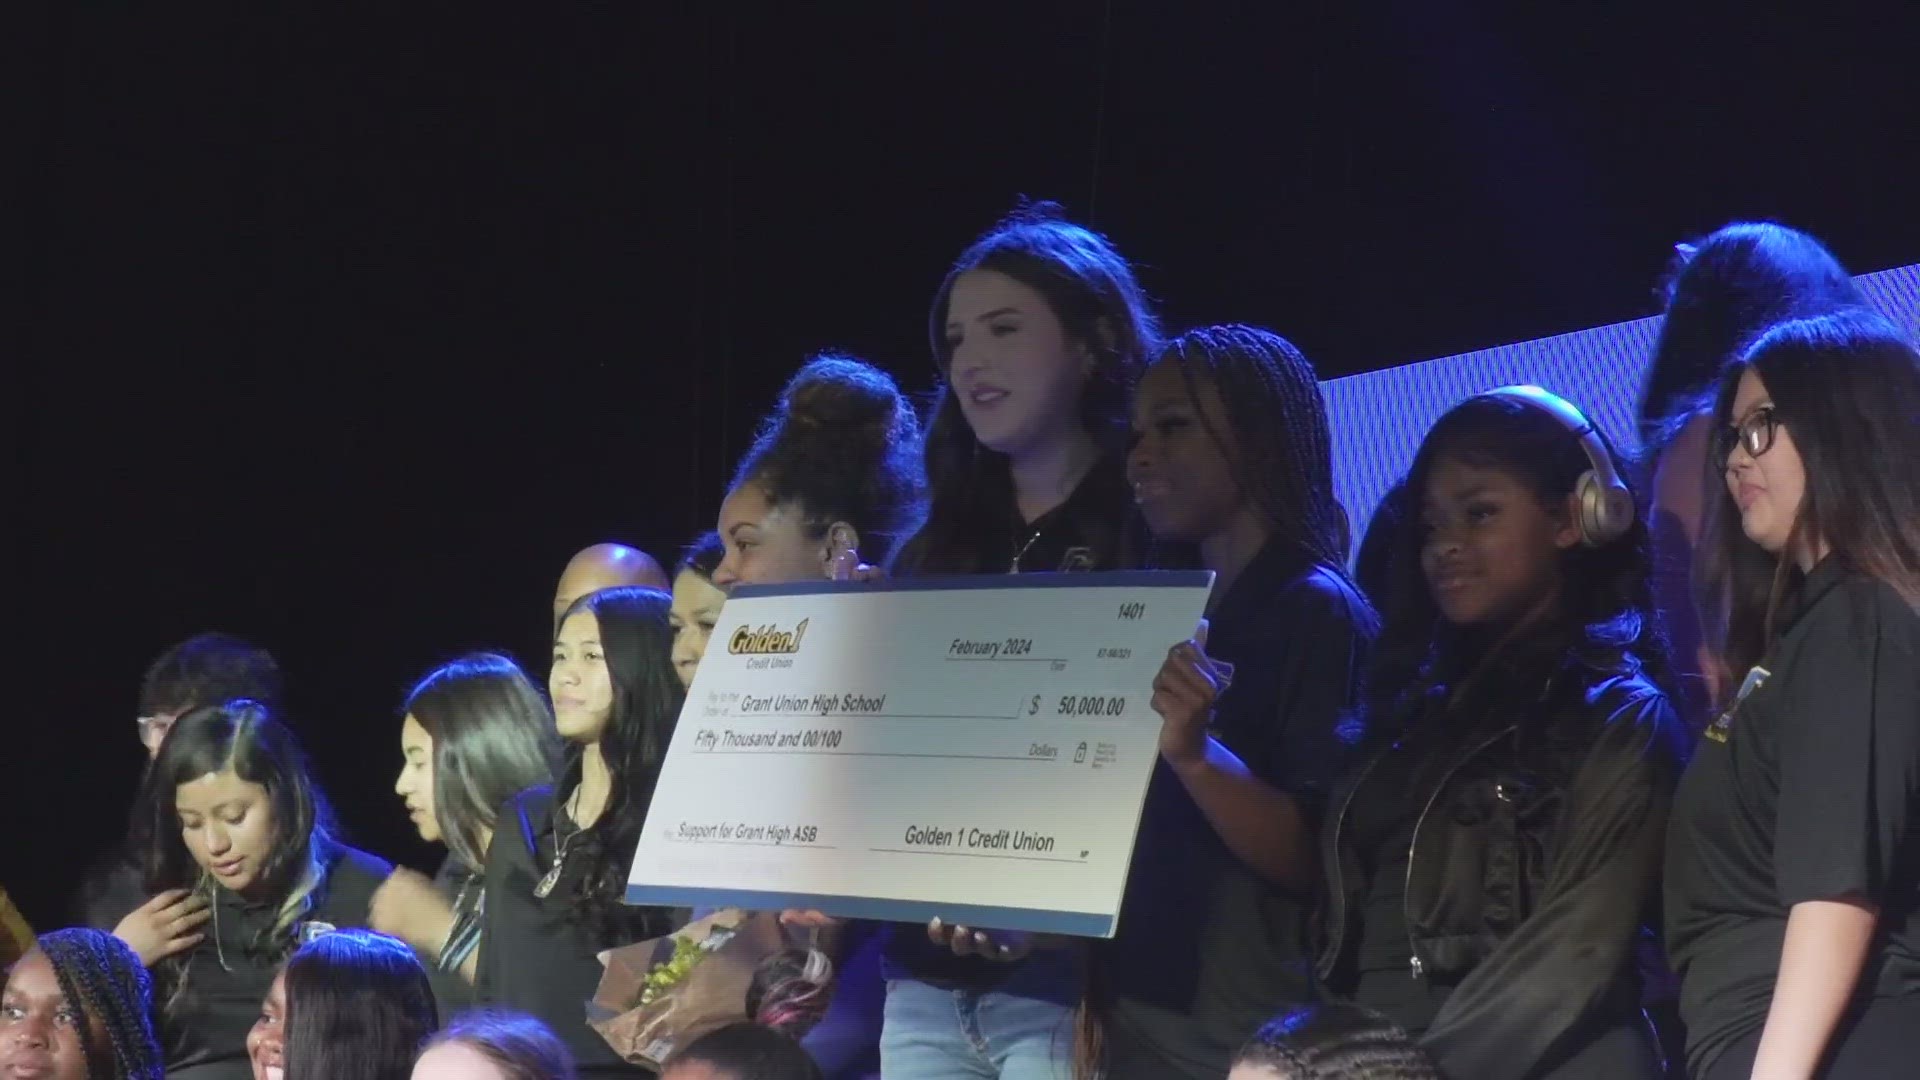 Grant High School students' work gets $50,000